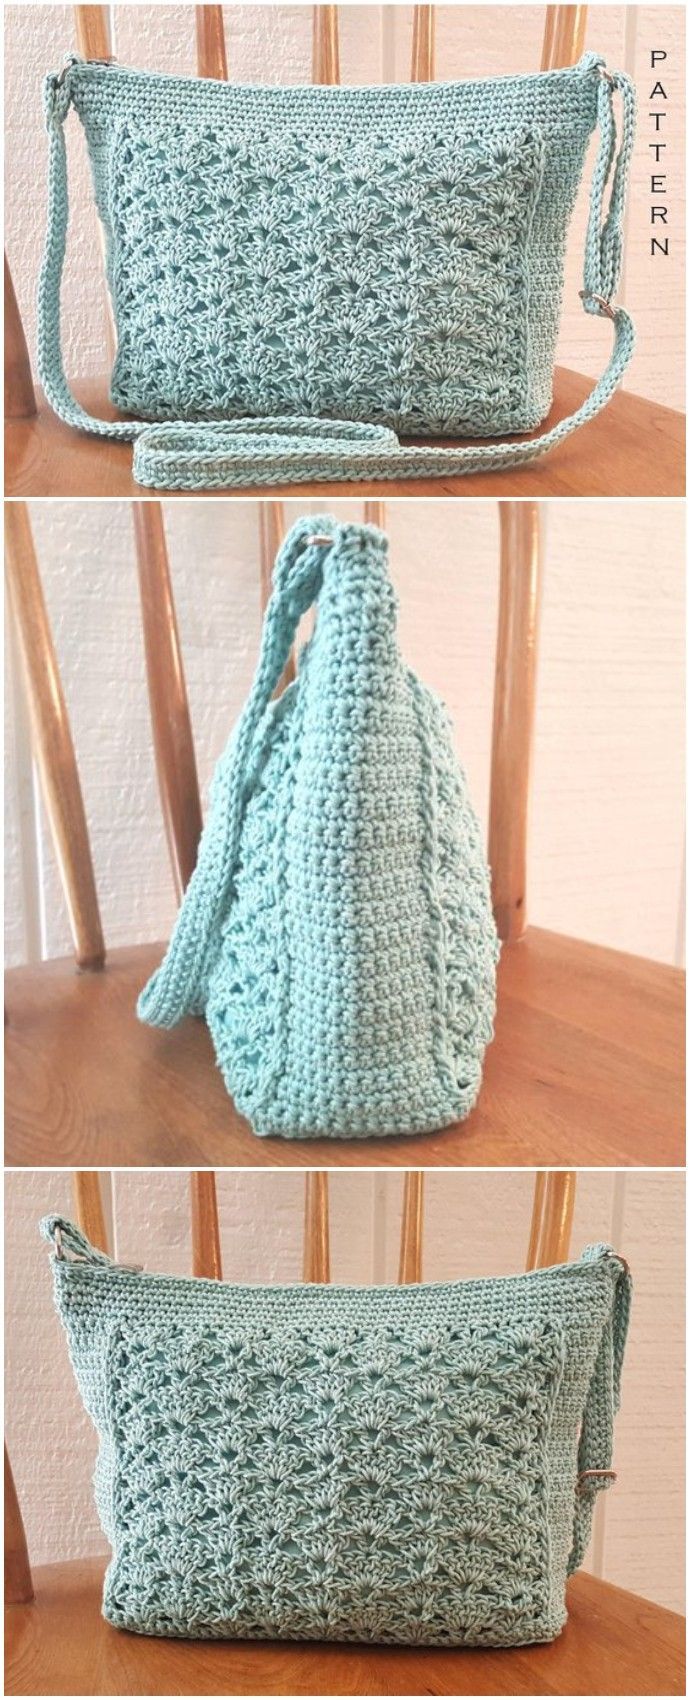 Crochet-Bag-Pattern-Einfache-Haekelanleitungen.jpg